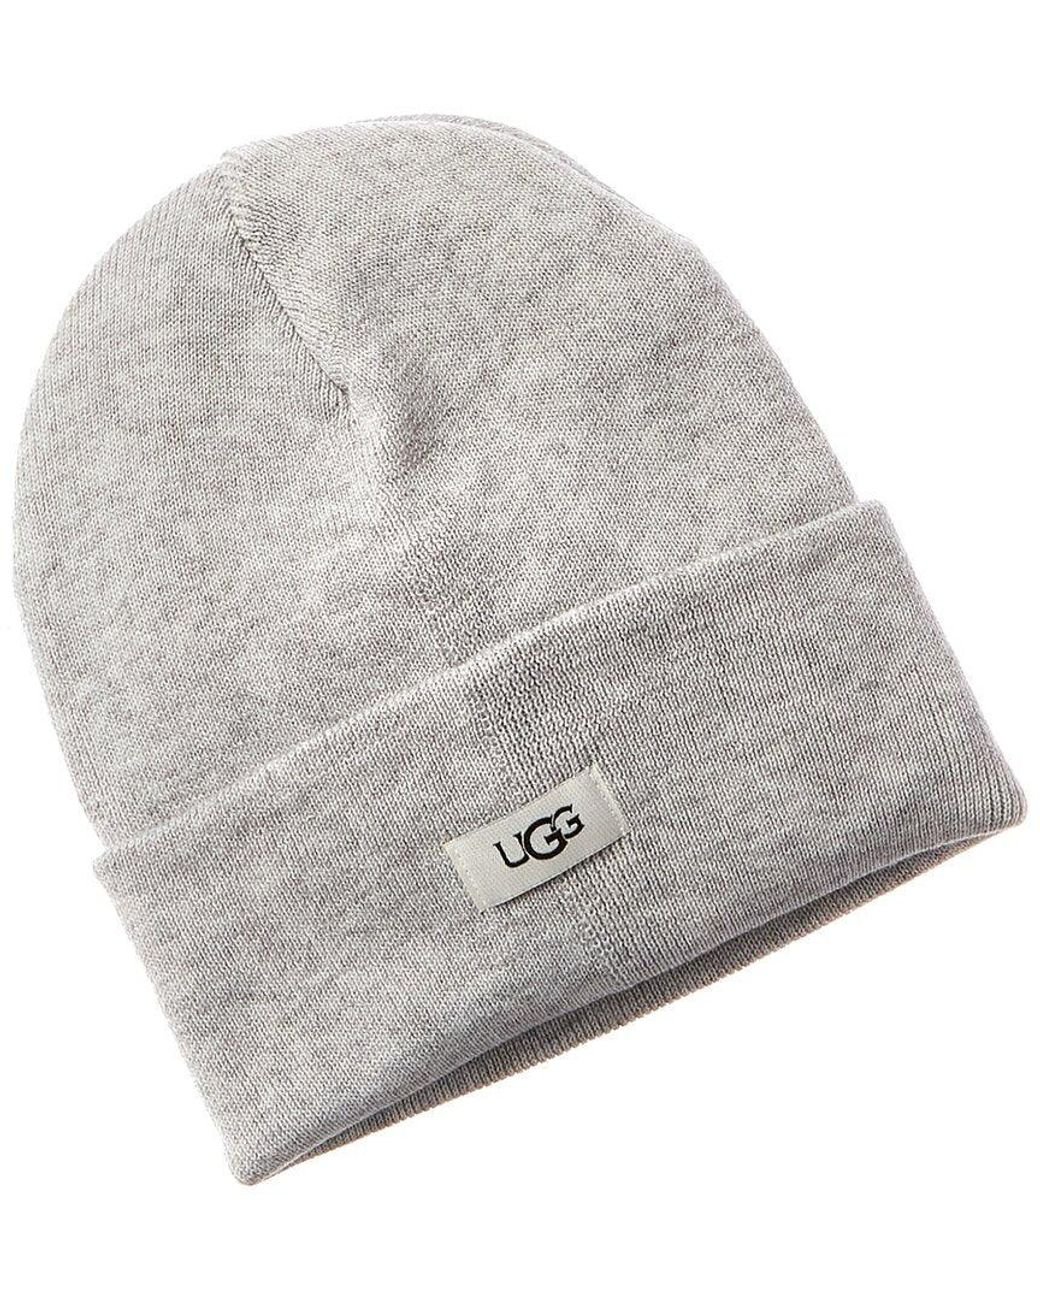 UGG Knit Cuff Wool-blend Hat in Gray | Lyst